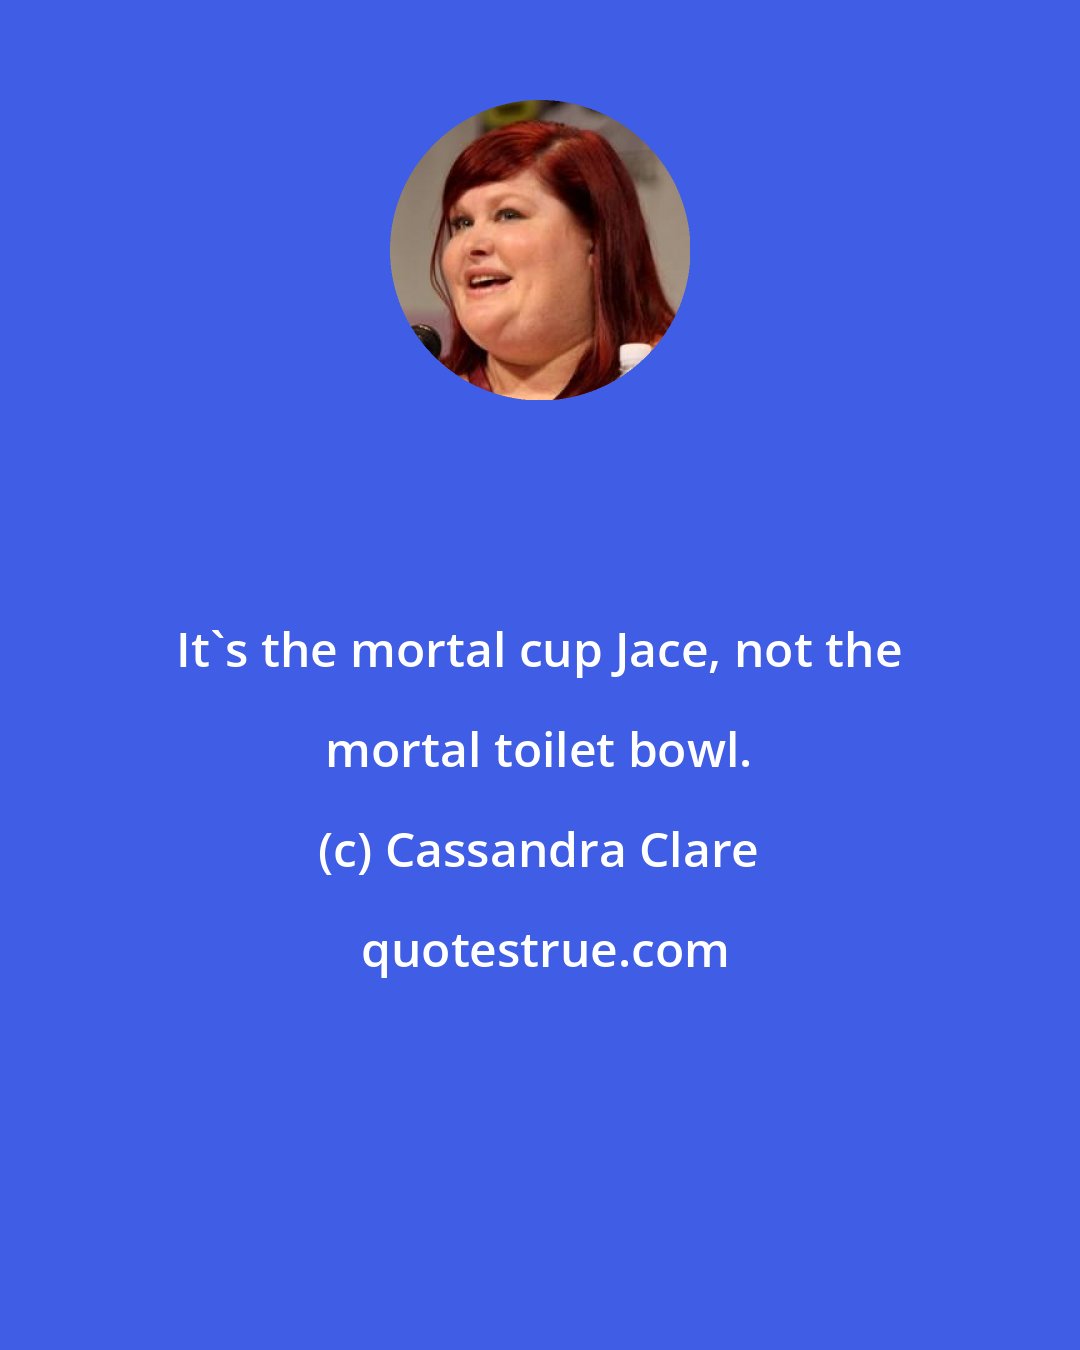 Cassandra Clare: It's the mortal cup Jace, not the mortal toilet bowl.